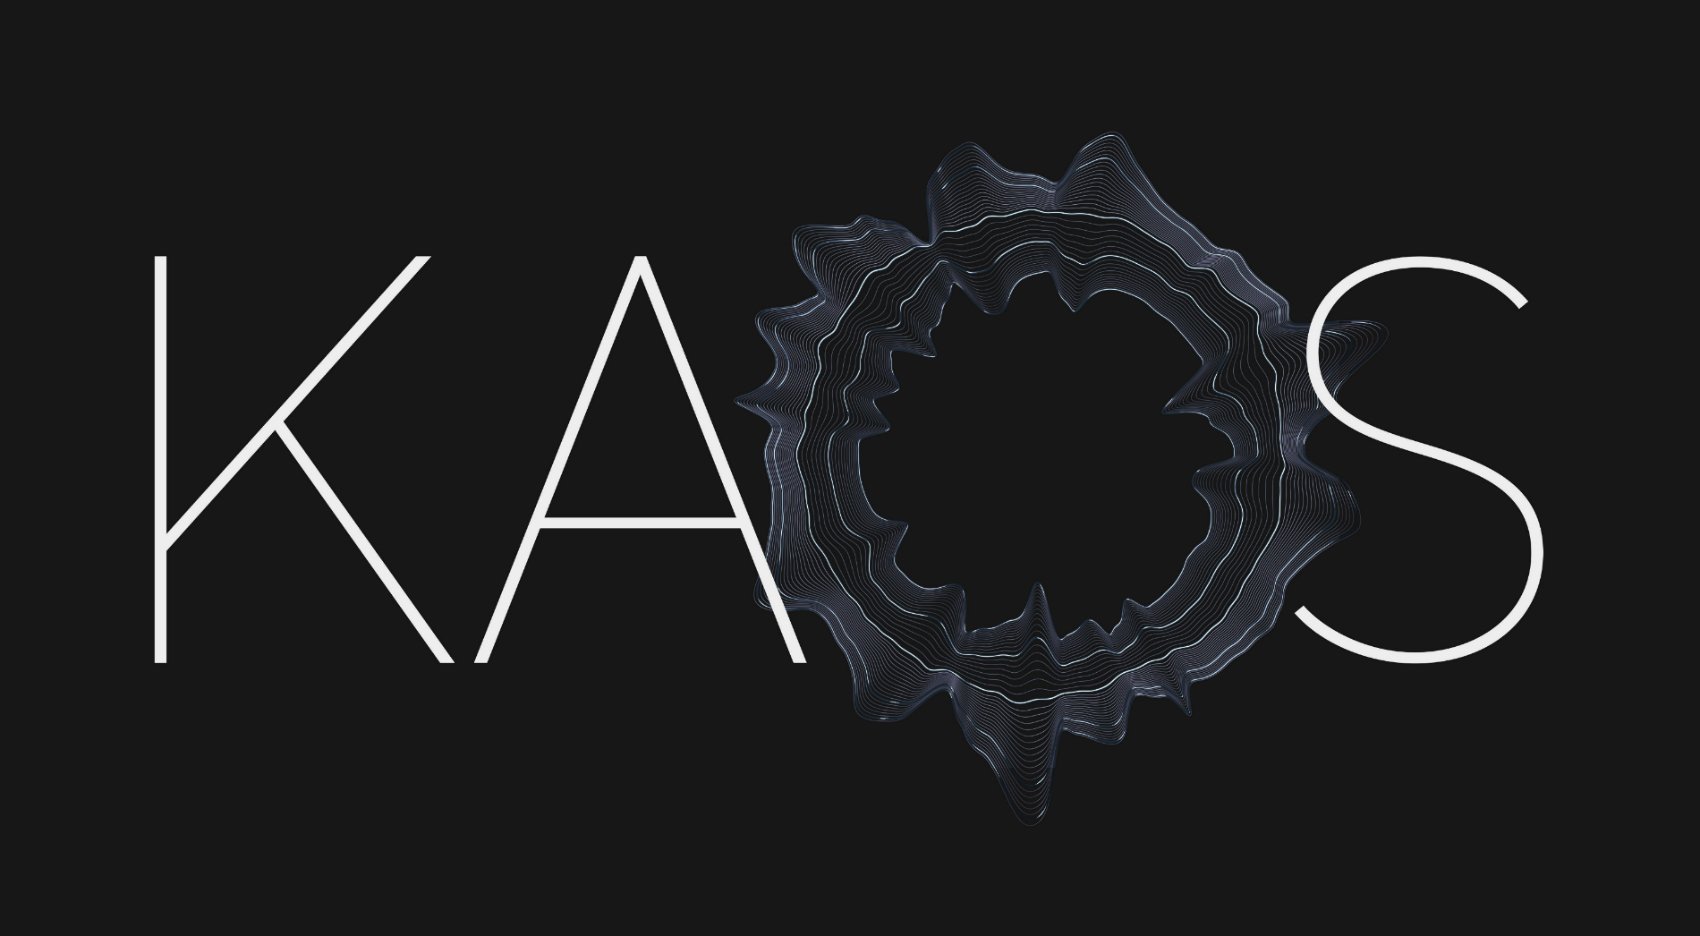 KAOS logo